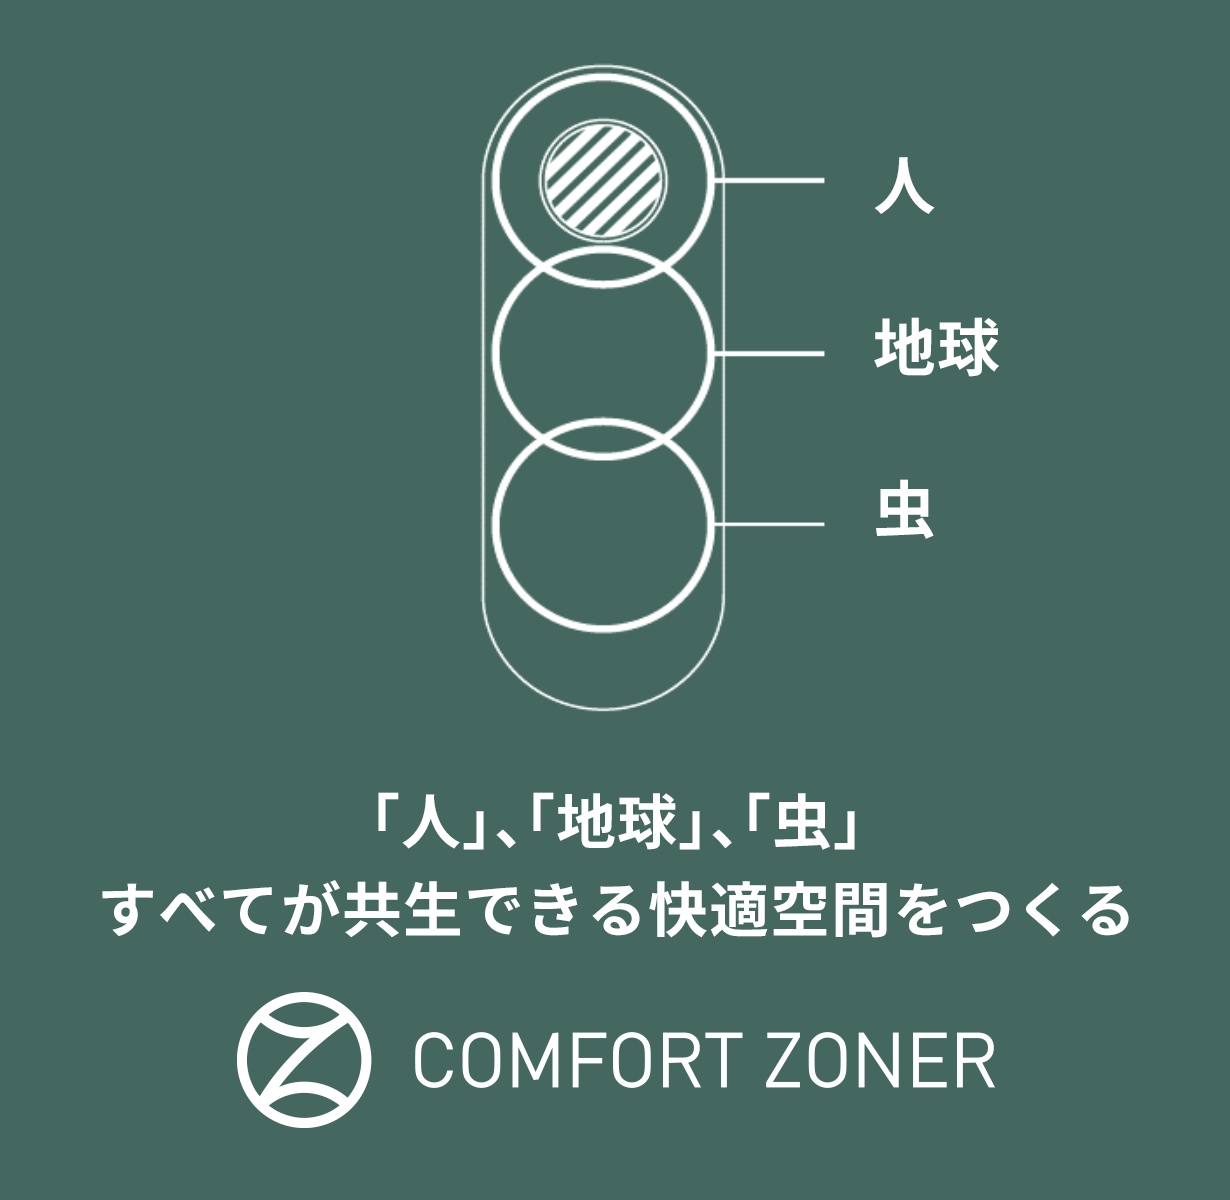 comfortzoner202304 (2)